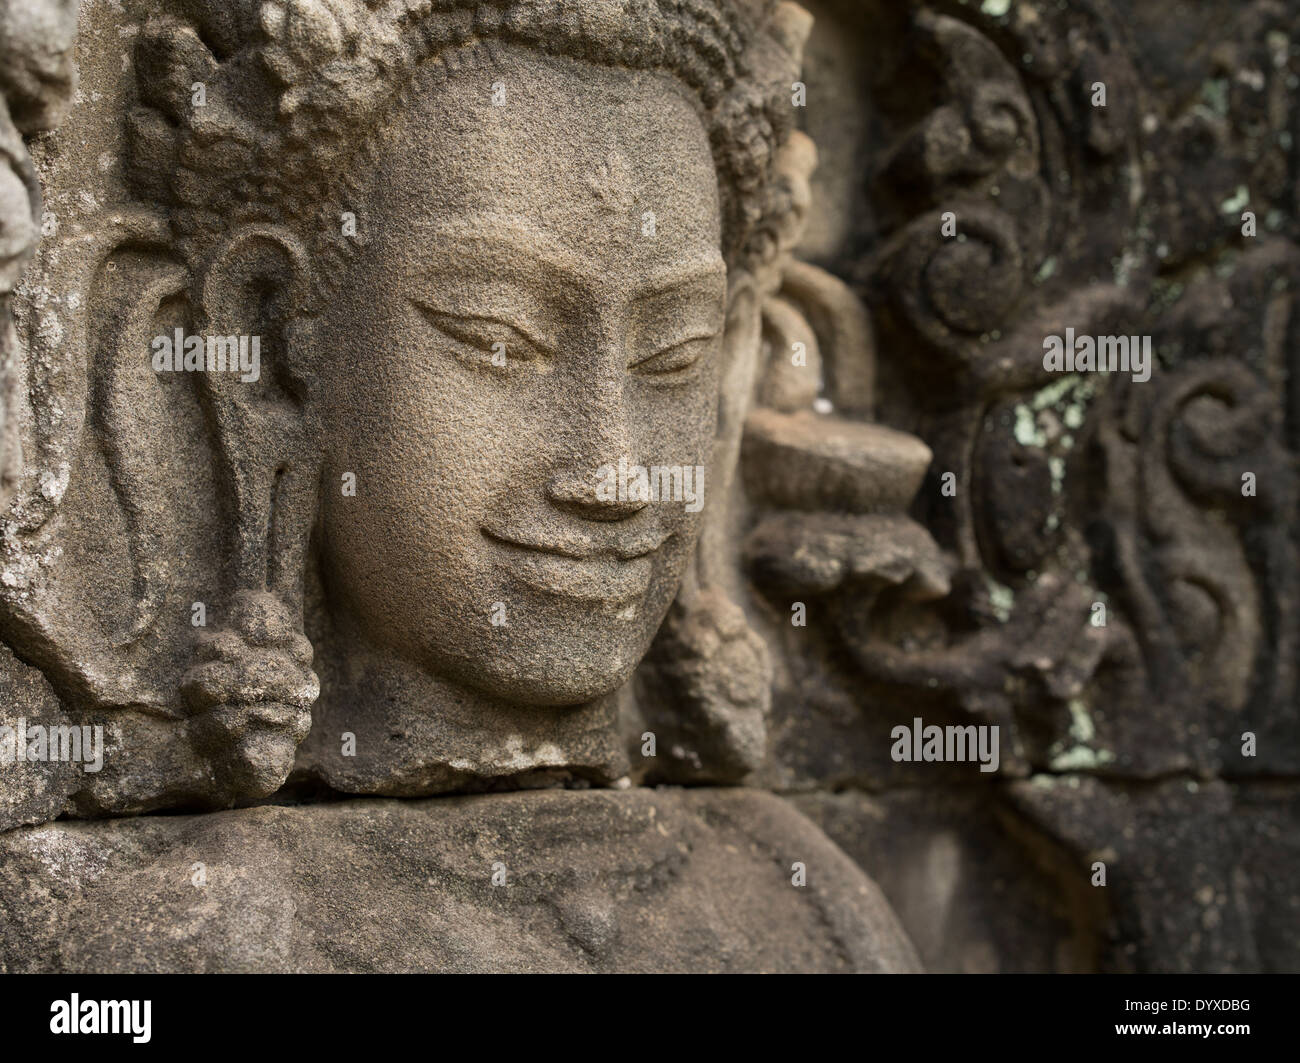 Arenaria bassorilievo sculture di Apsara al tempio Bayon, Angkor Thom, Siem Reap, Cambogia Foto Stock